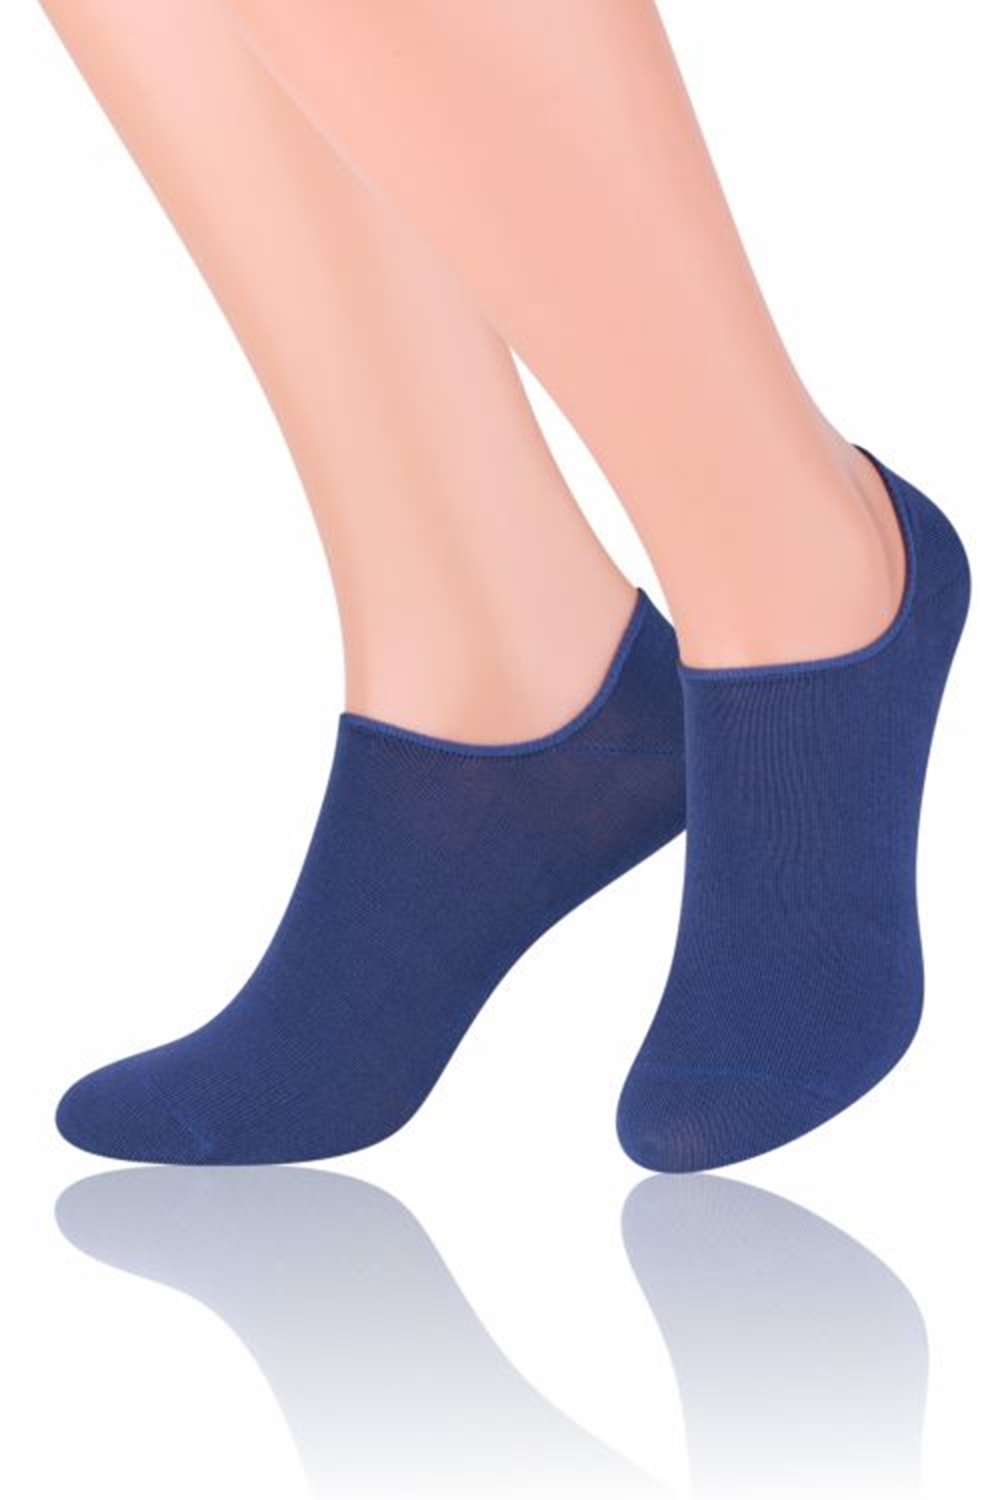 E-shop Dámske ponožky Invisible 070 dark blue